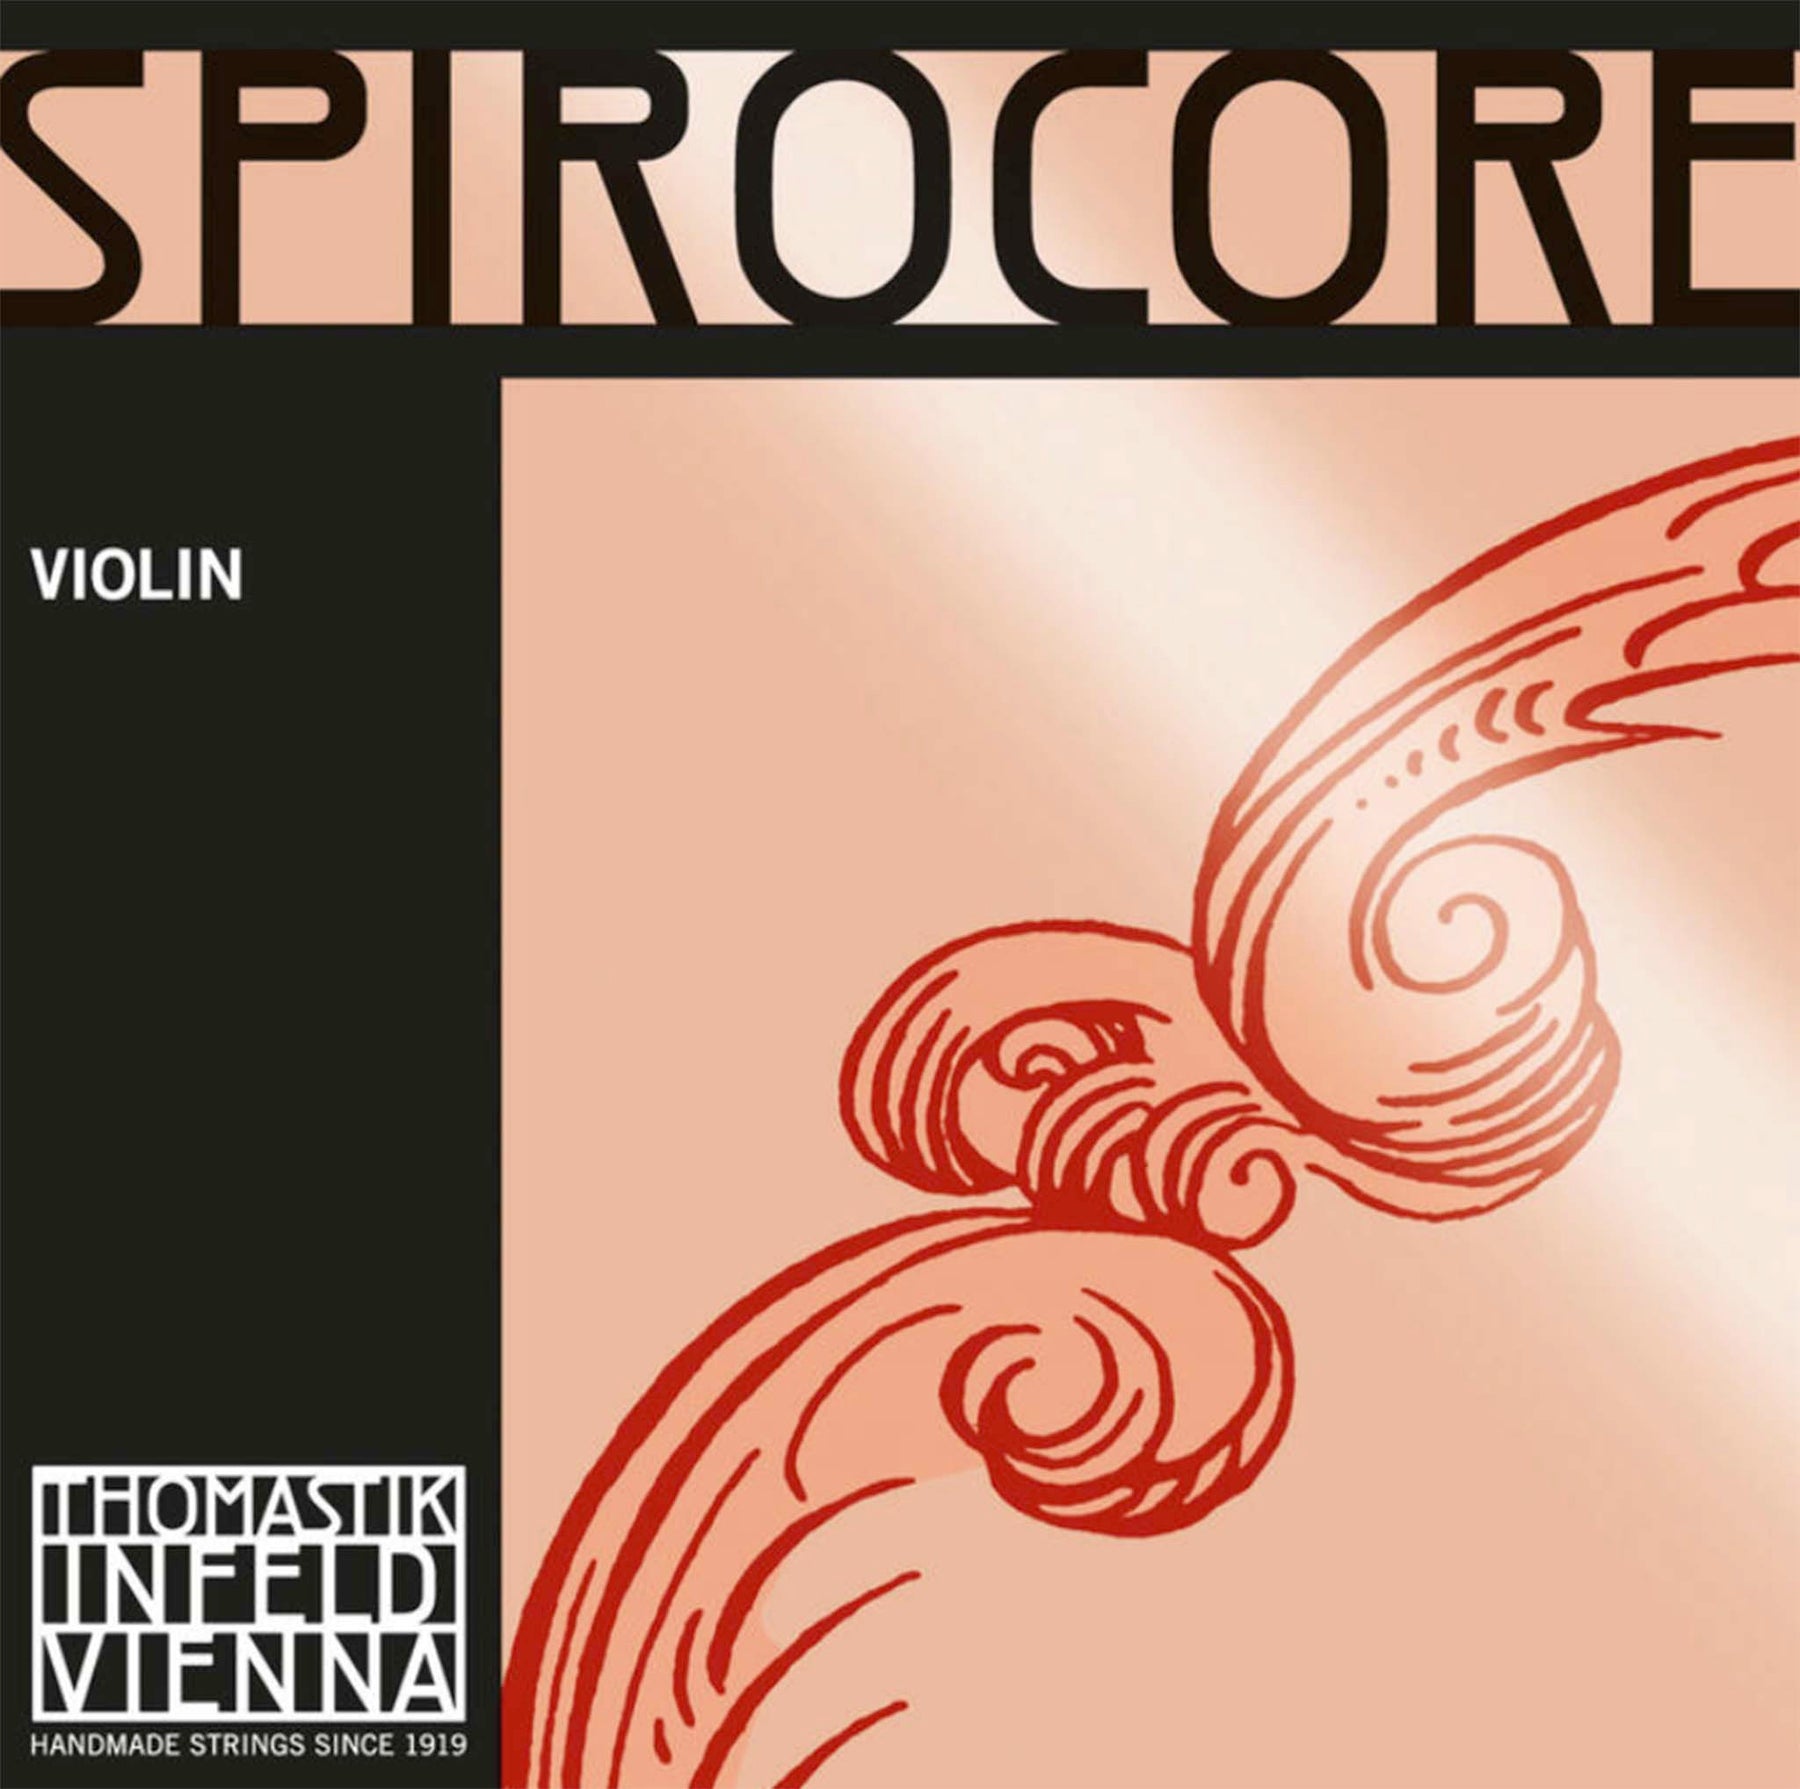 Thomastik Spirocore Violin G String